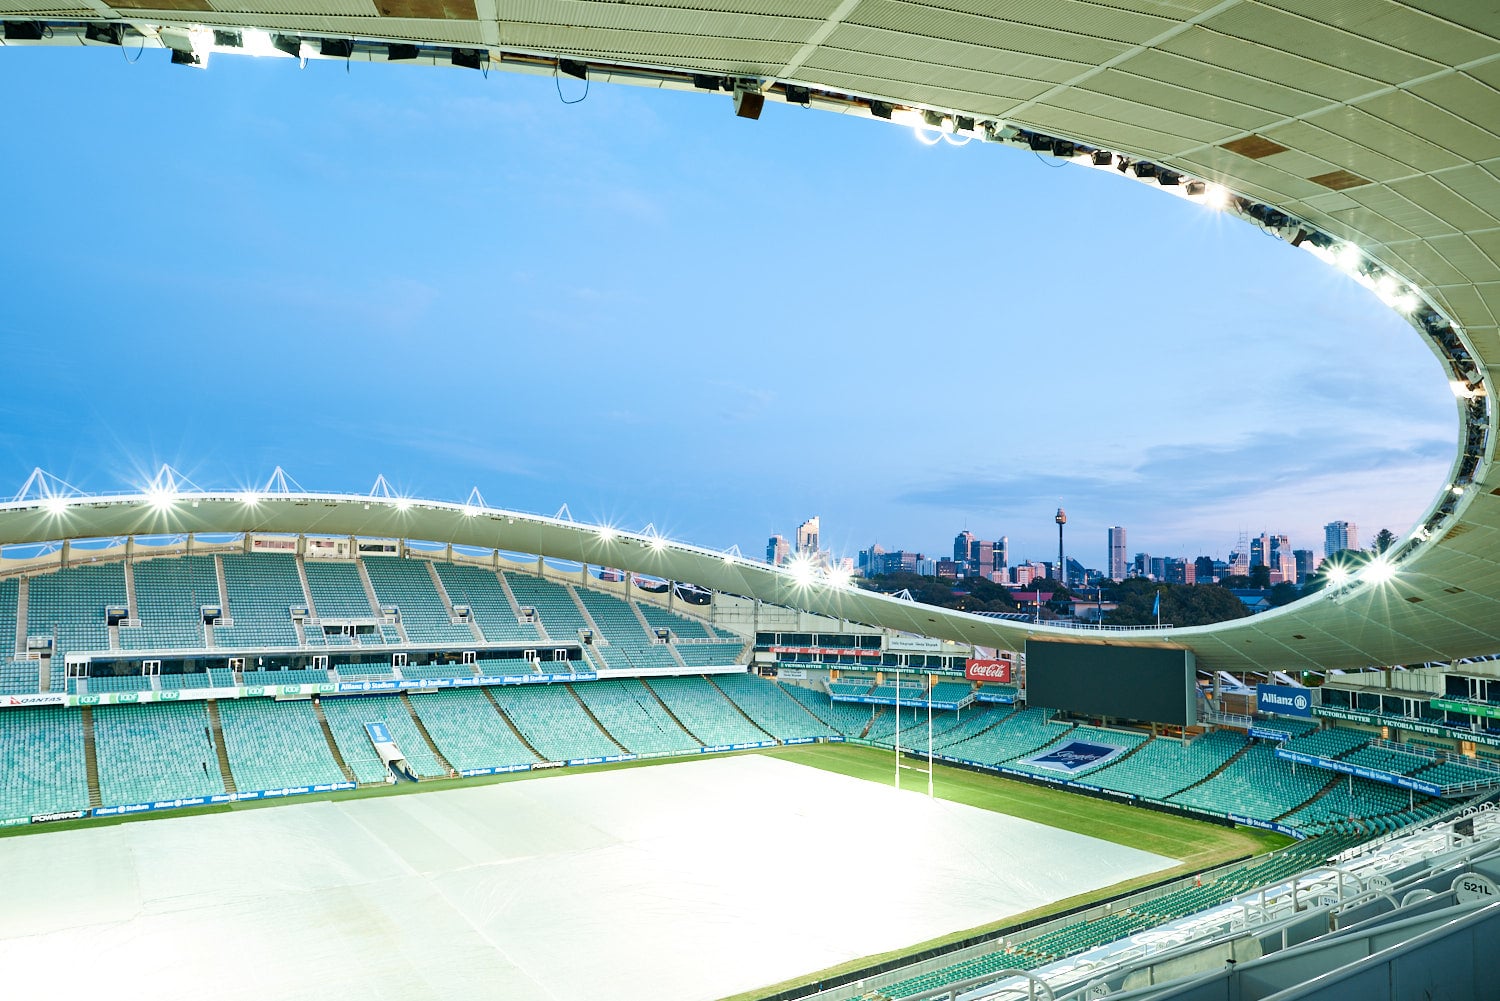 Sydney Football Stadium 1988-2018 with City View photo